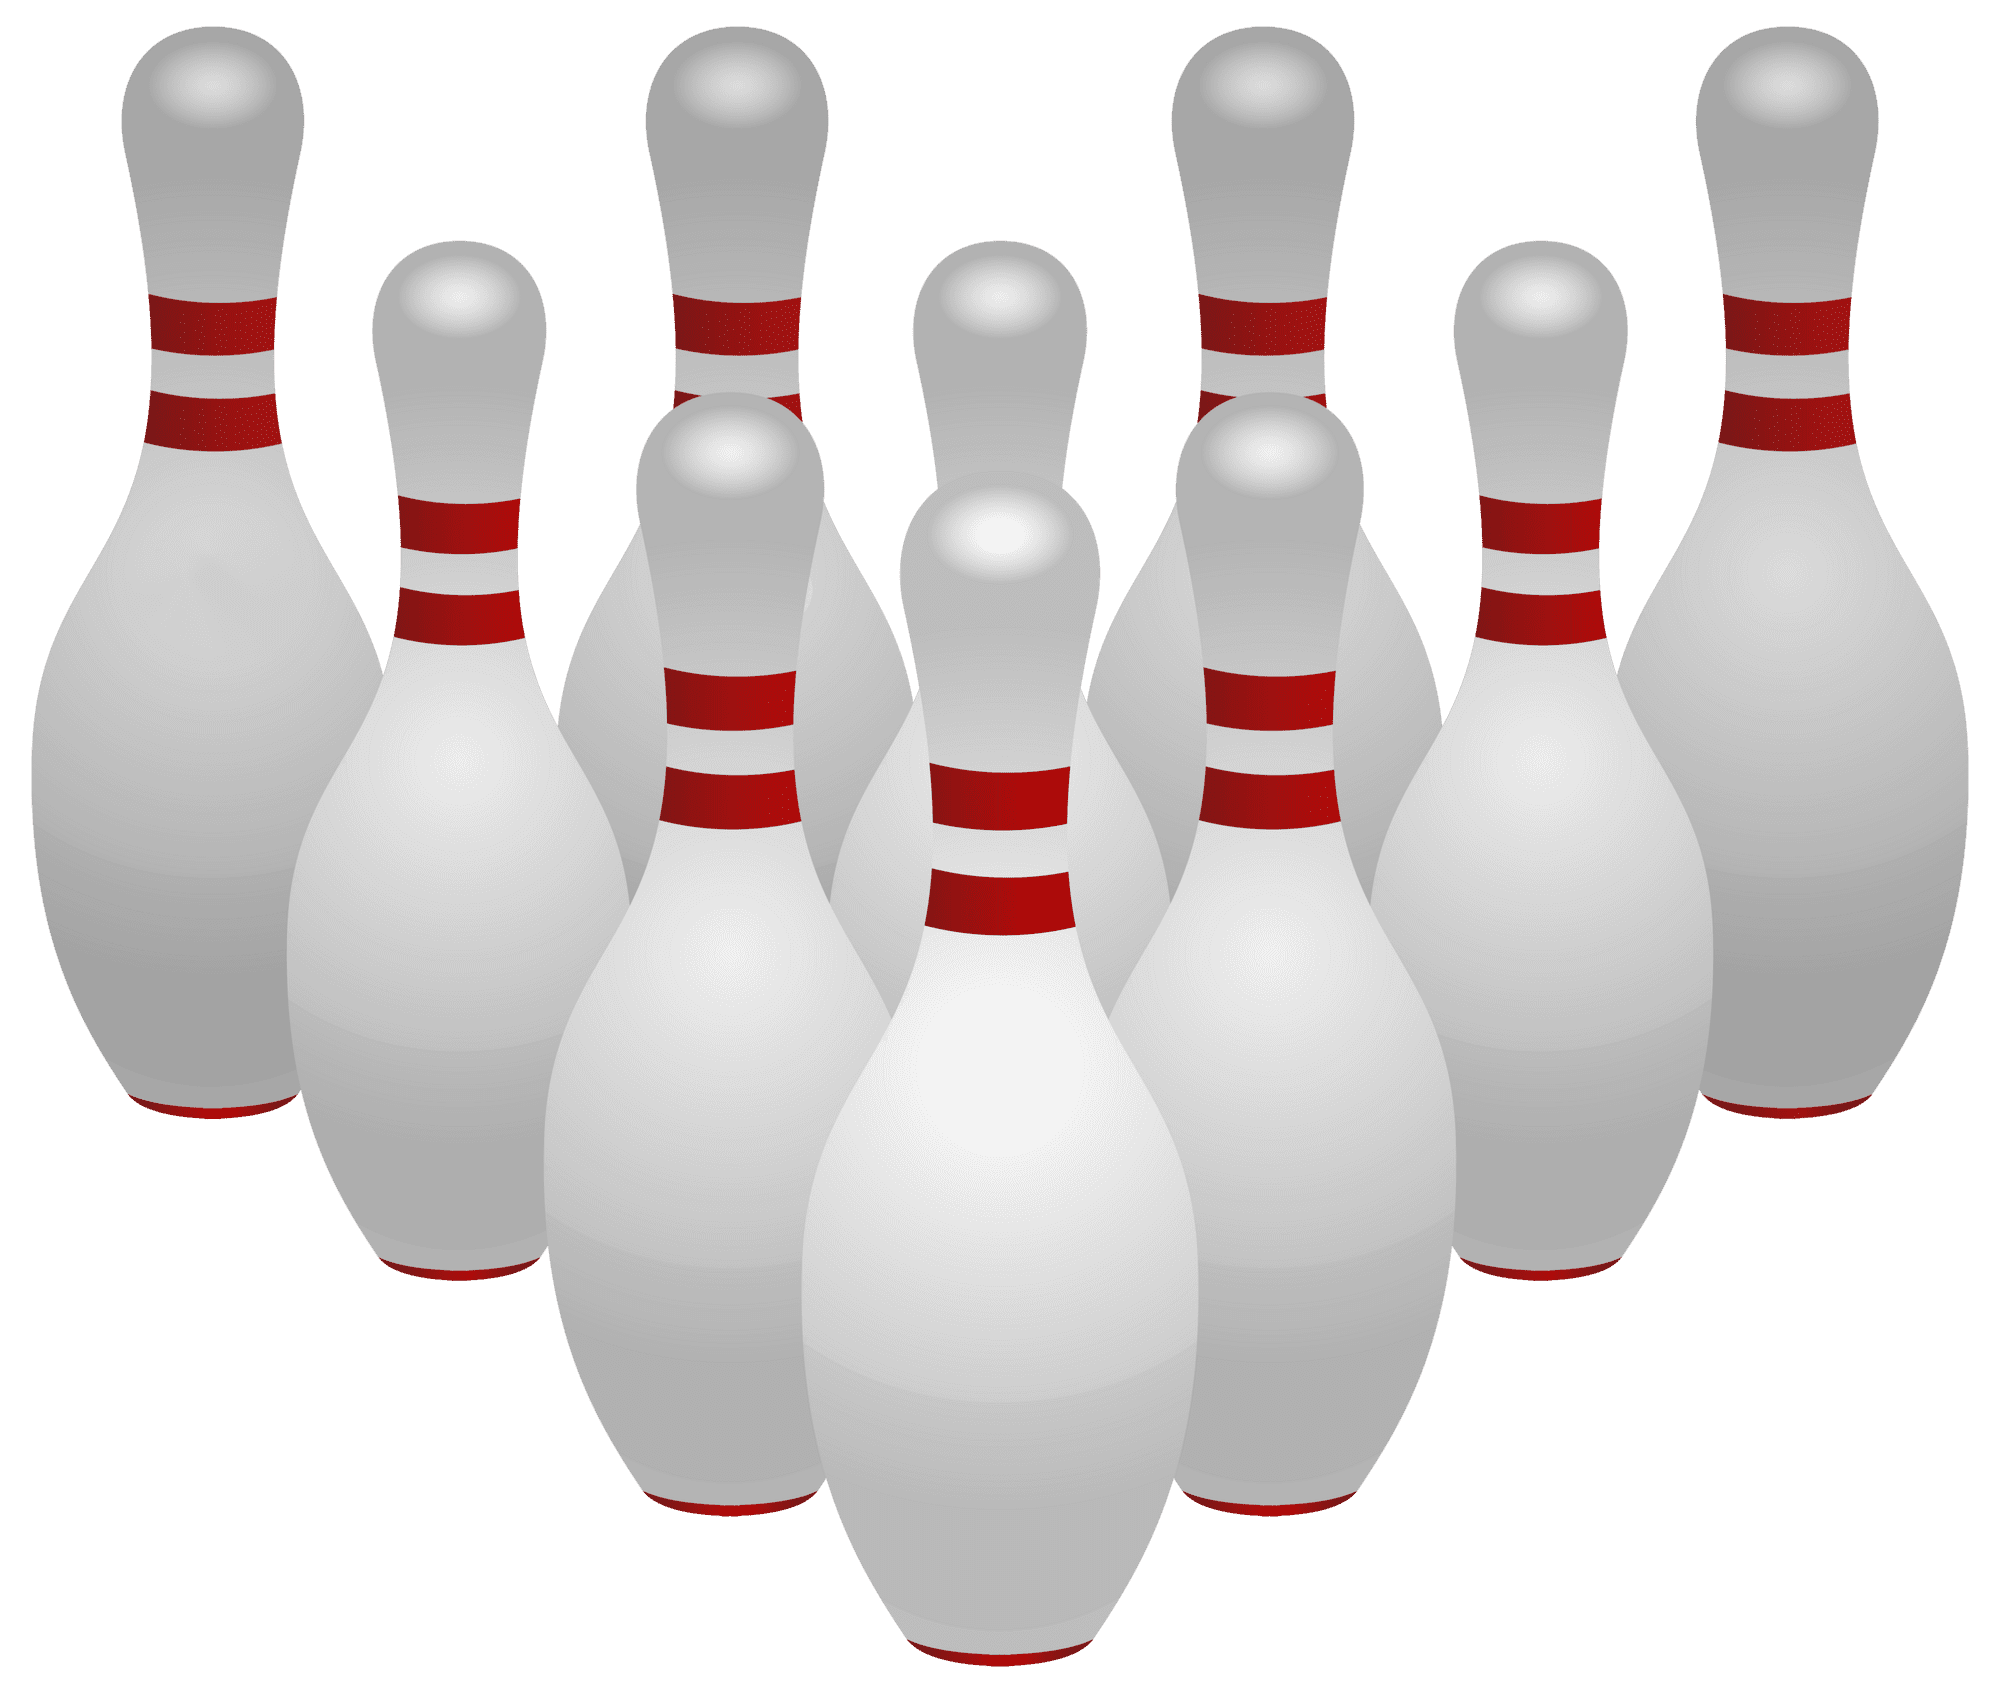 Bowling pin clipart best logo